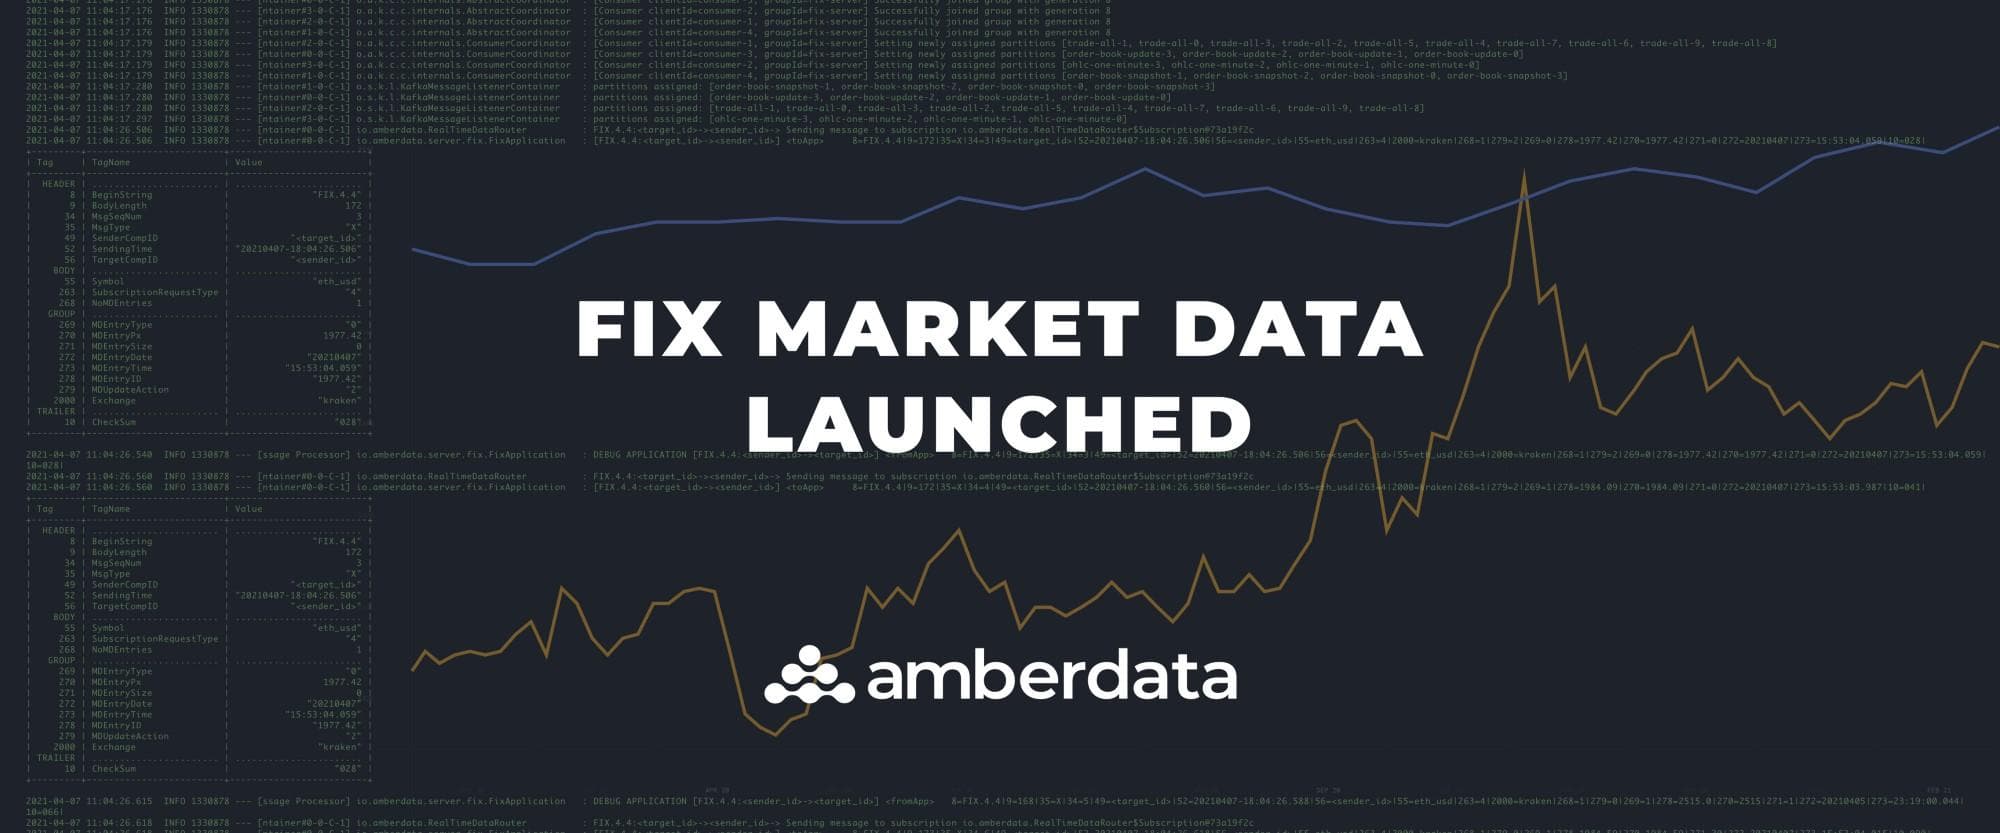 FIX Protocol 4.4 Market Data API Just Launched on Amberdata.io